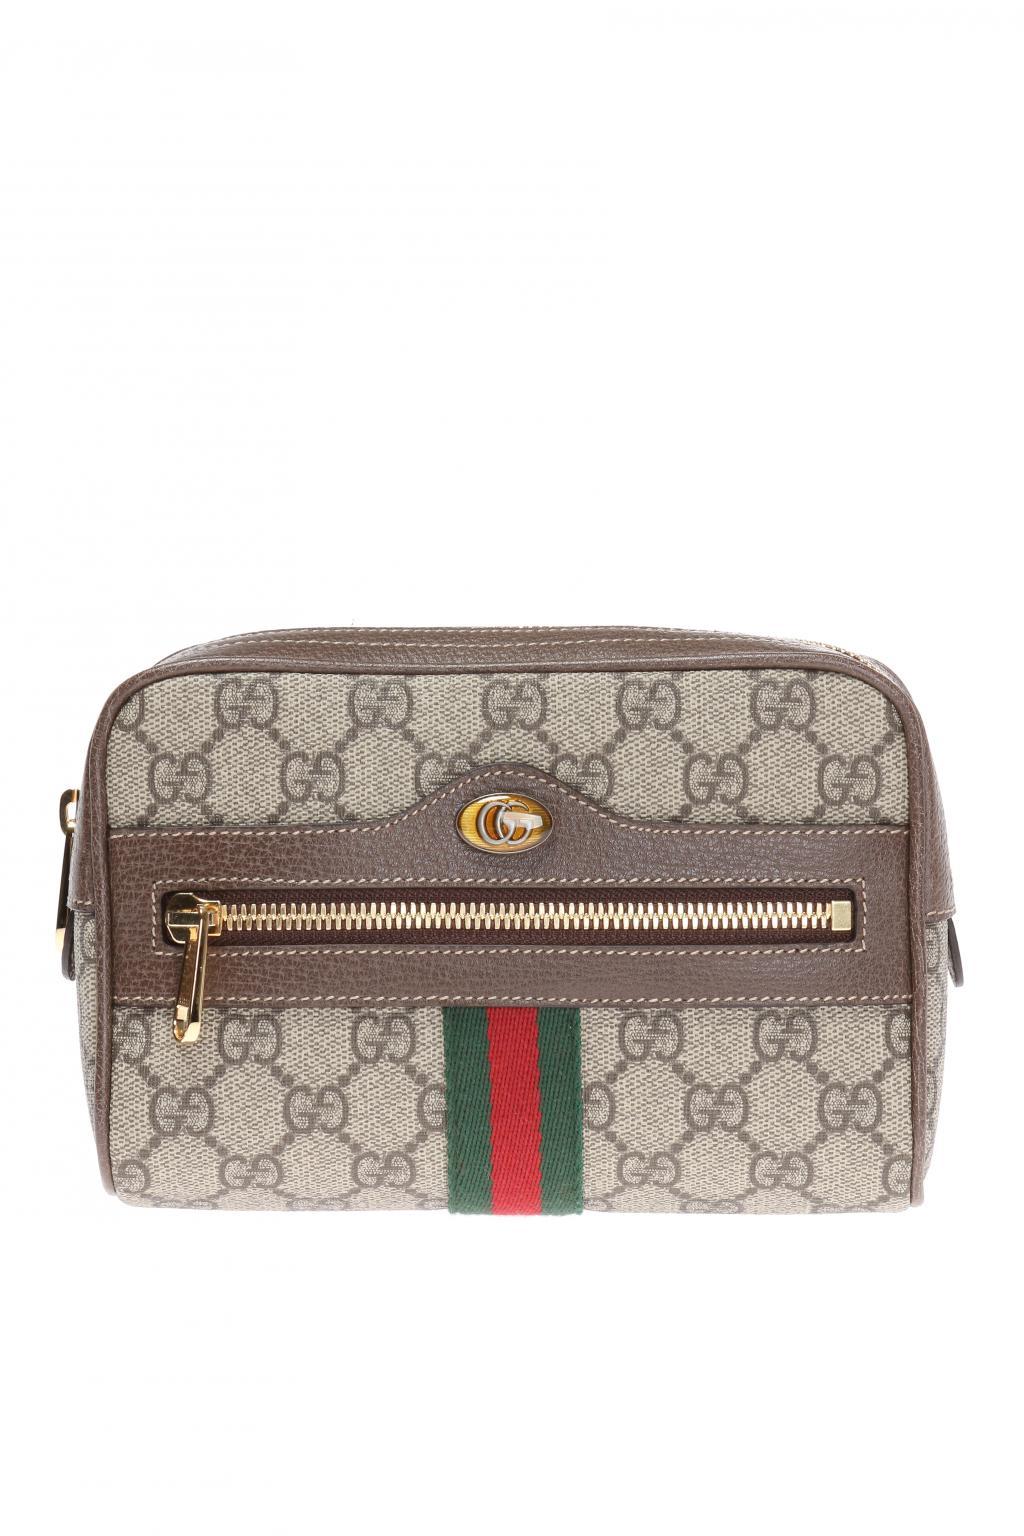 Gucci Small Ophidia Belt Bag